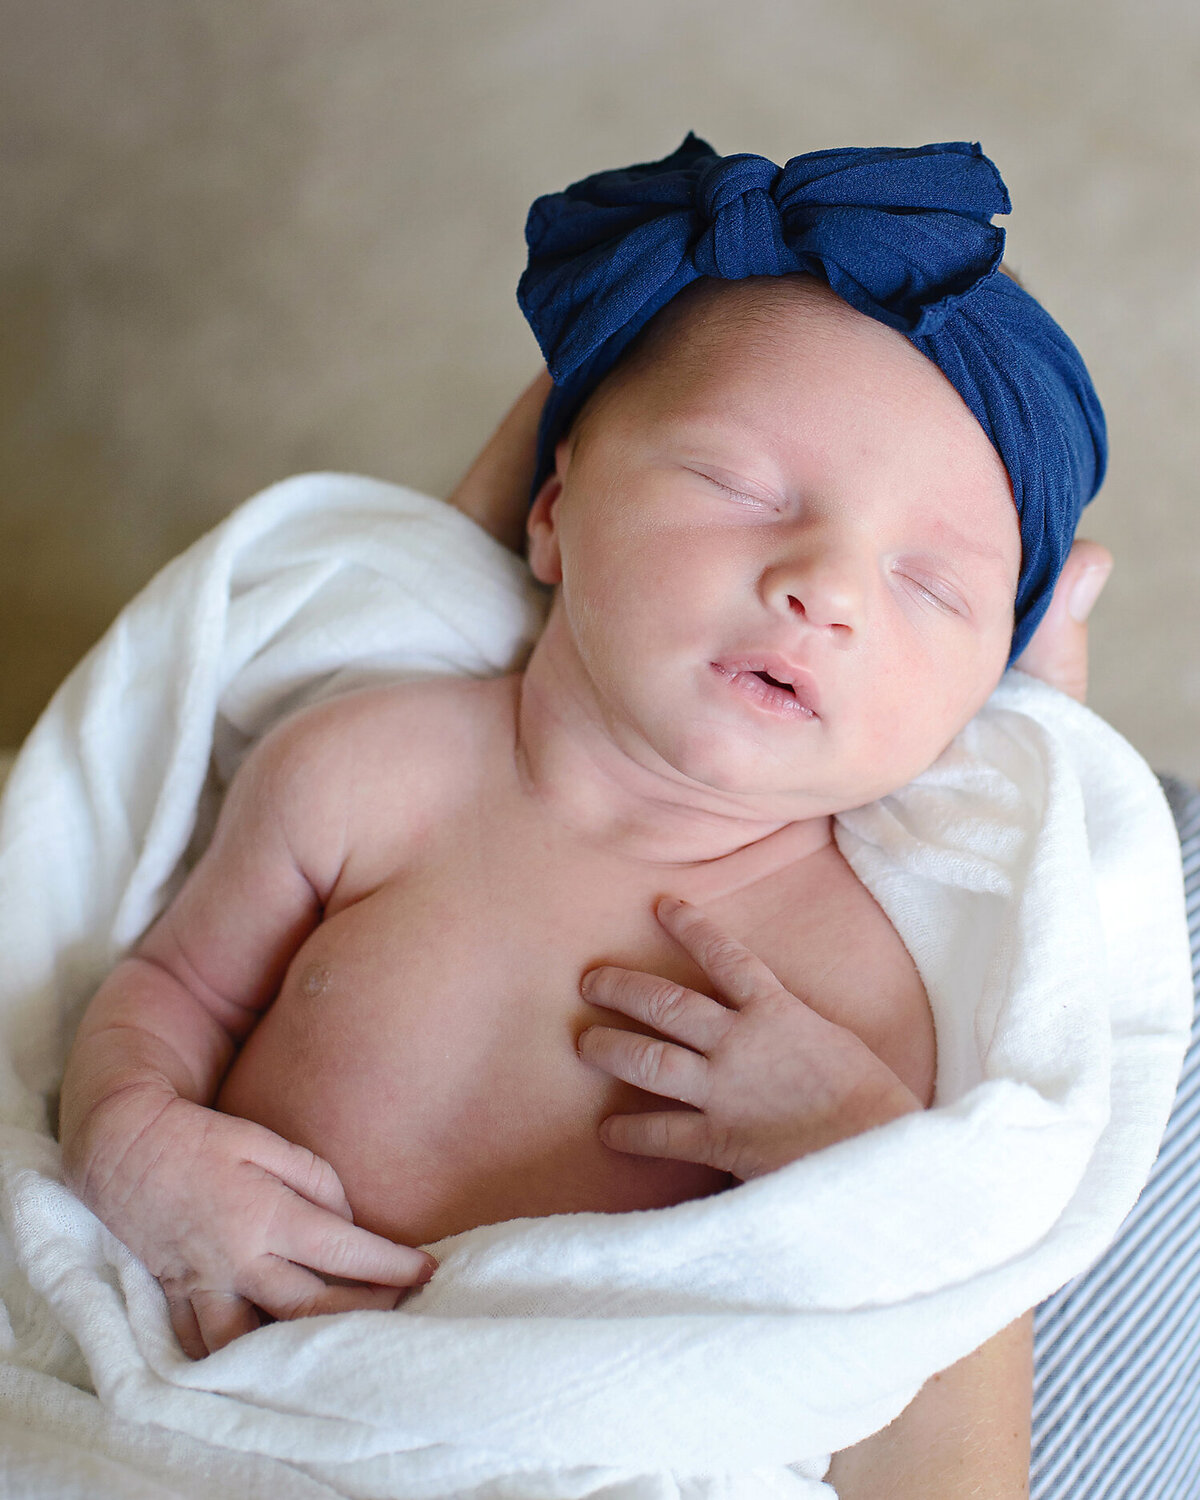 Sleeping newborn wrapped in a white blanket wearing a blue headband.